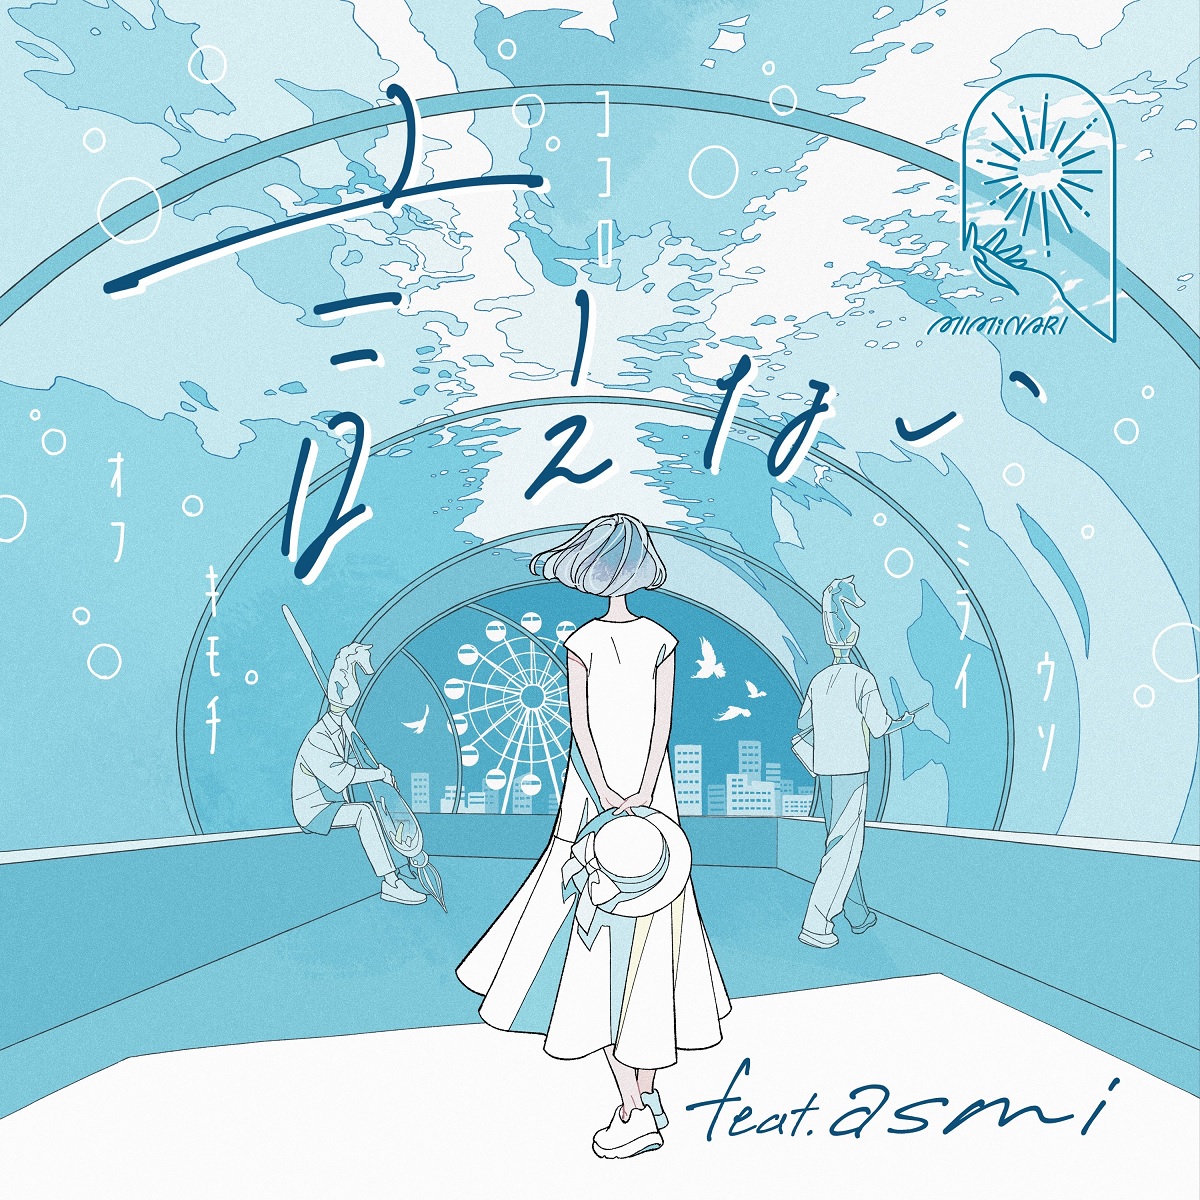 Cover art for『MIMiNARI - 言えない feat.asmi』from the release『Ienai feat. asmi